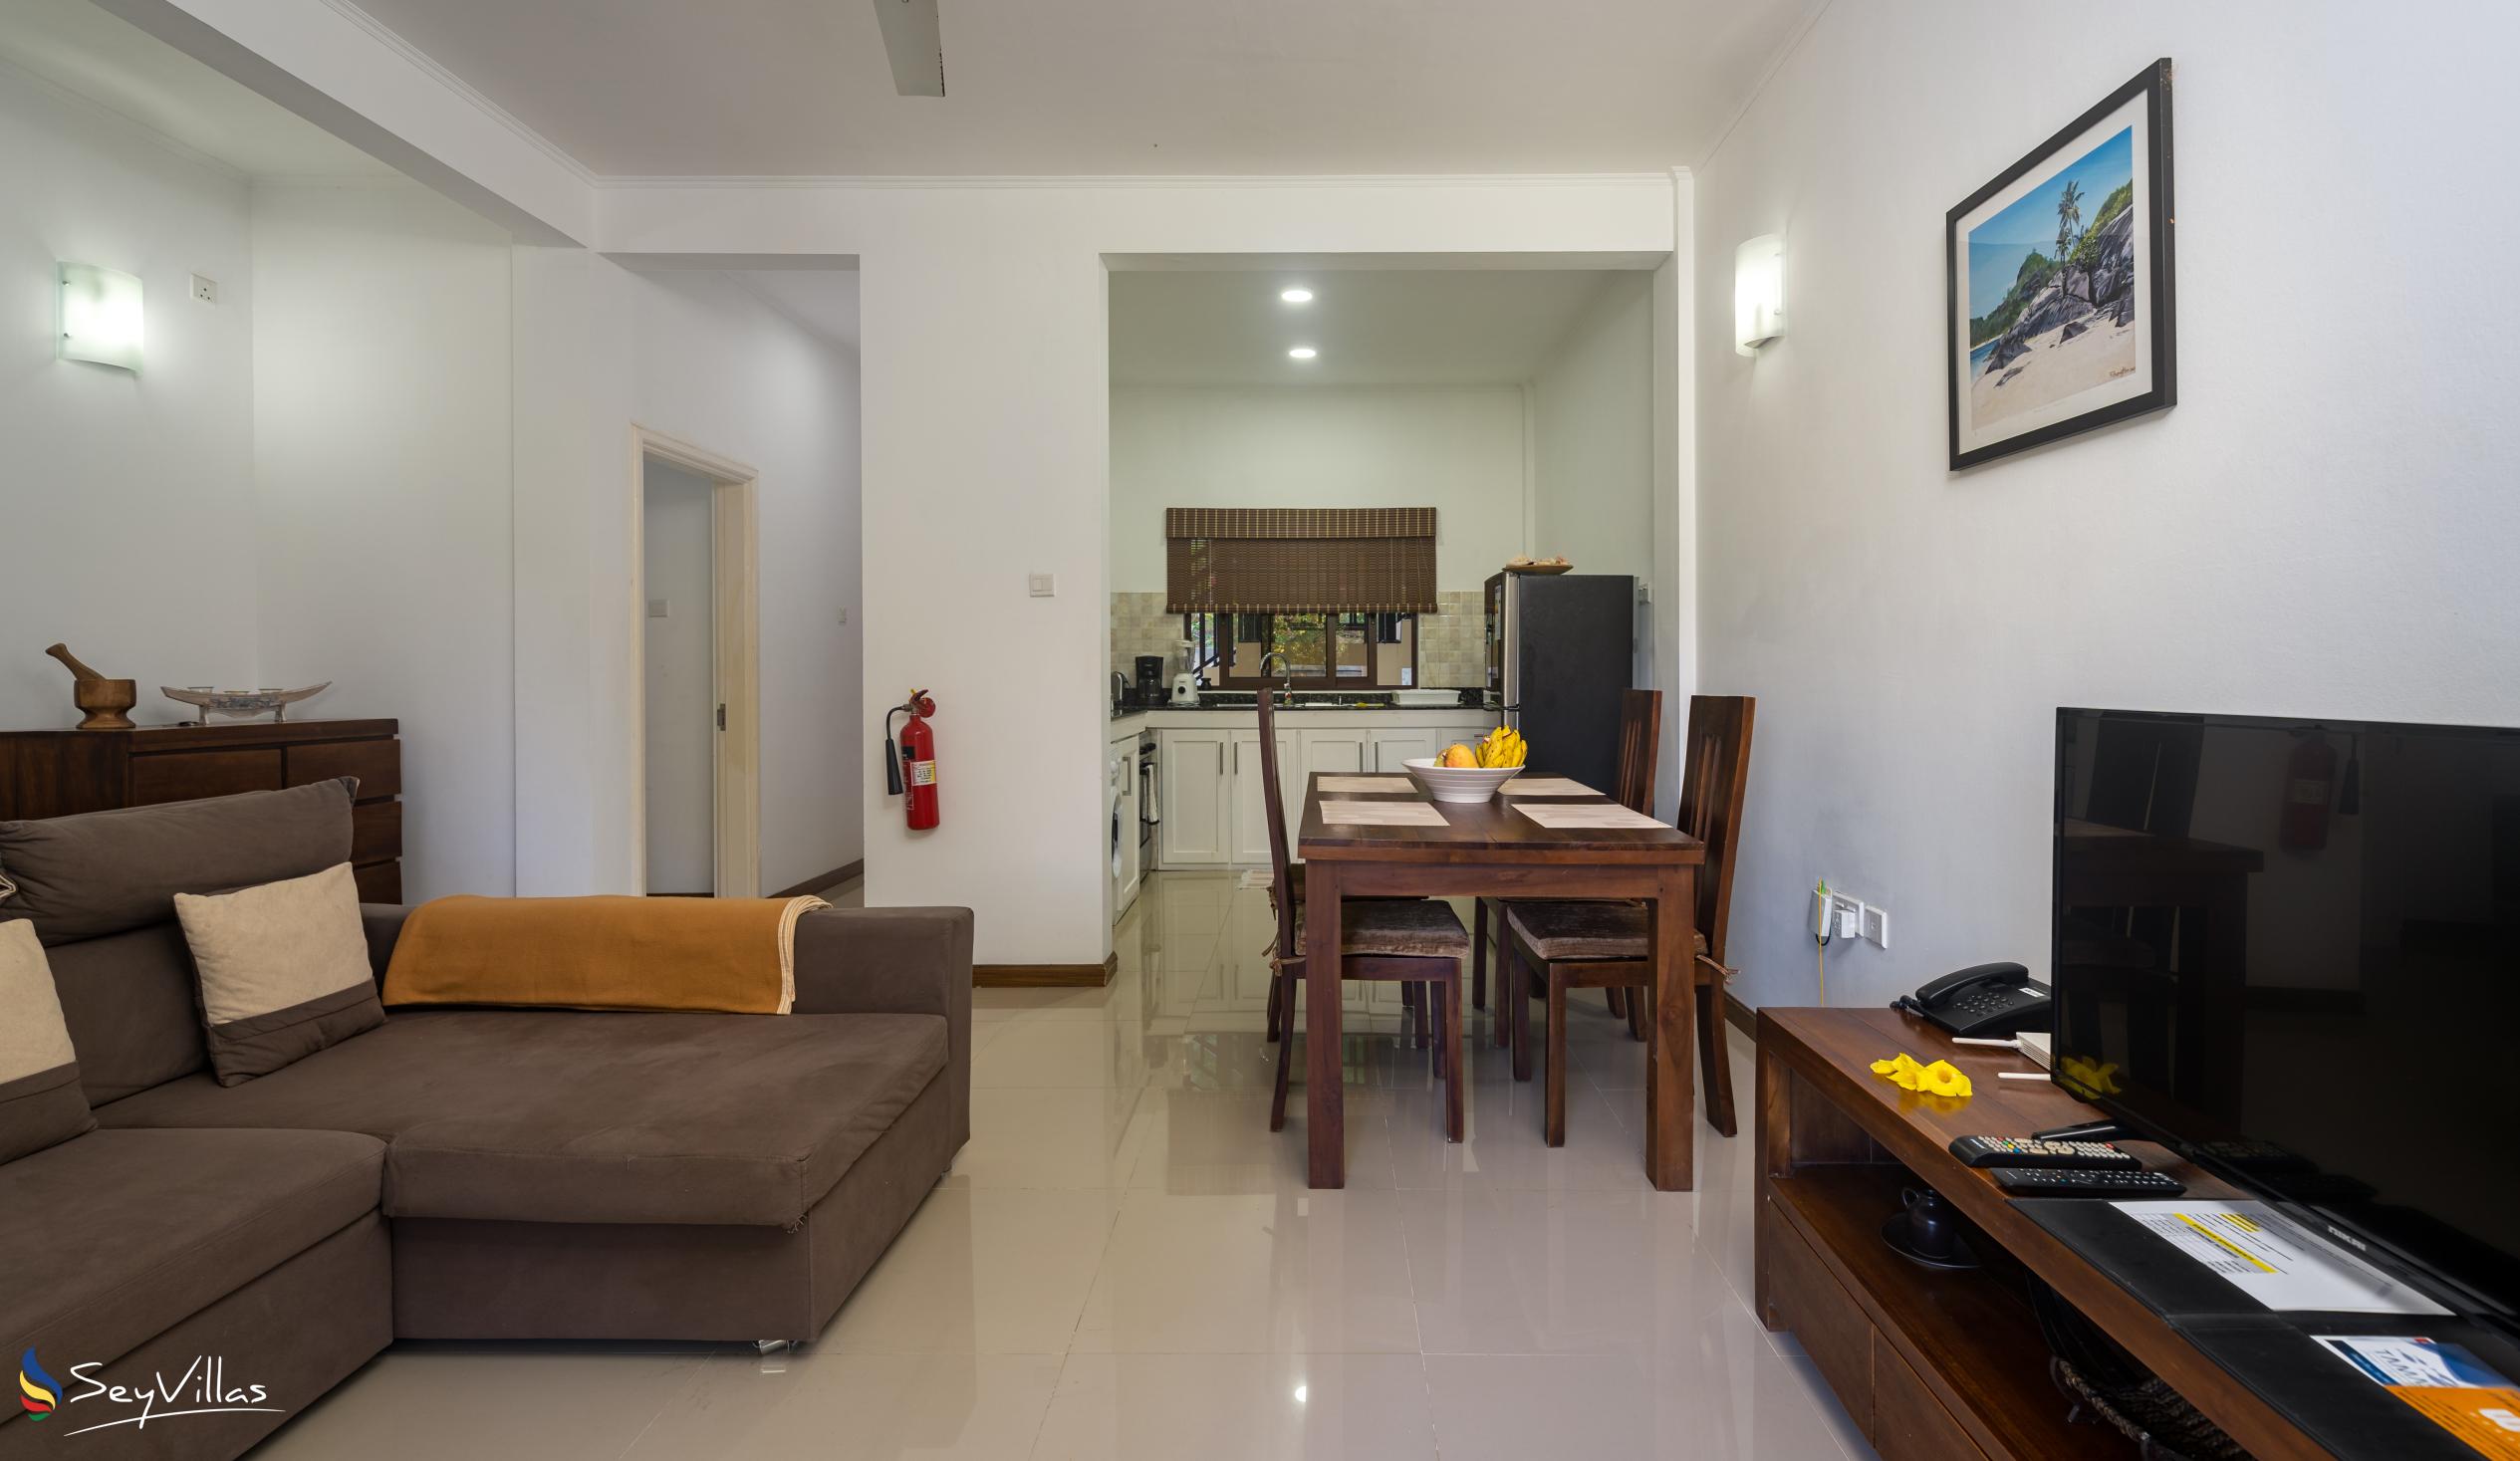 Foto 36: Kanasuk Self Catering Apartments - Appartamento Lemongrass con 2 camere - Mahé (Seychelles)